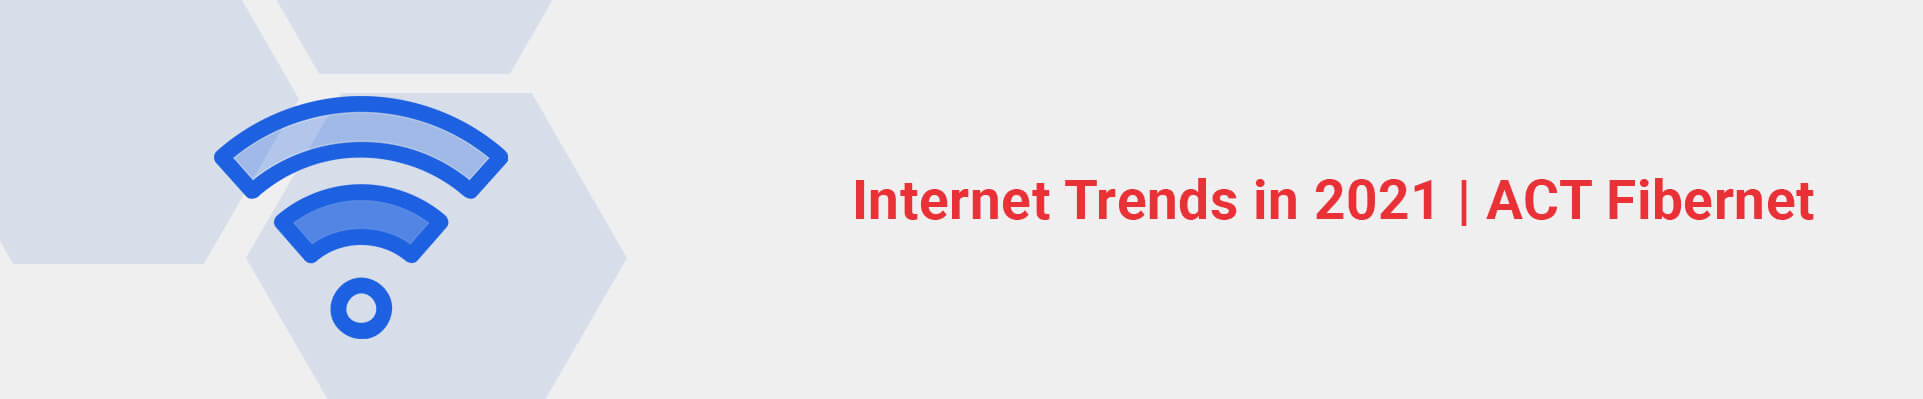 Internet Trends in 2021